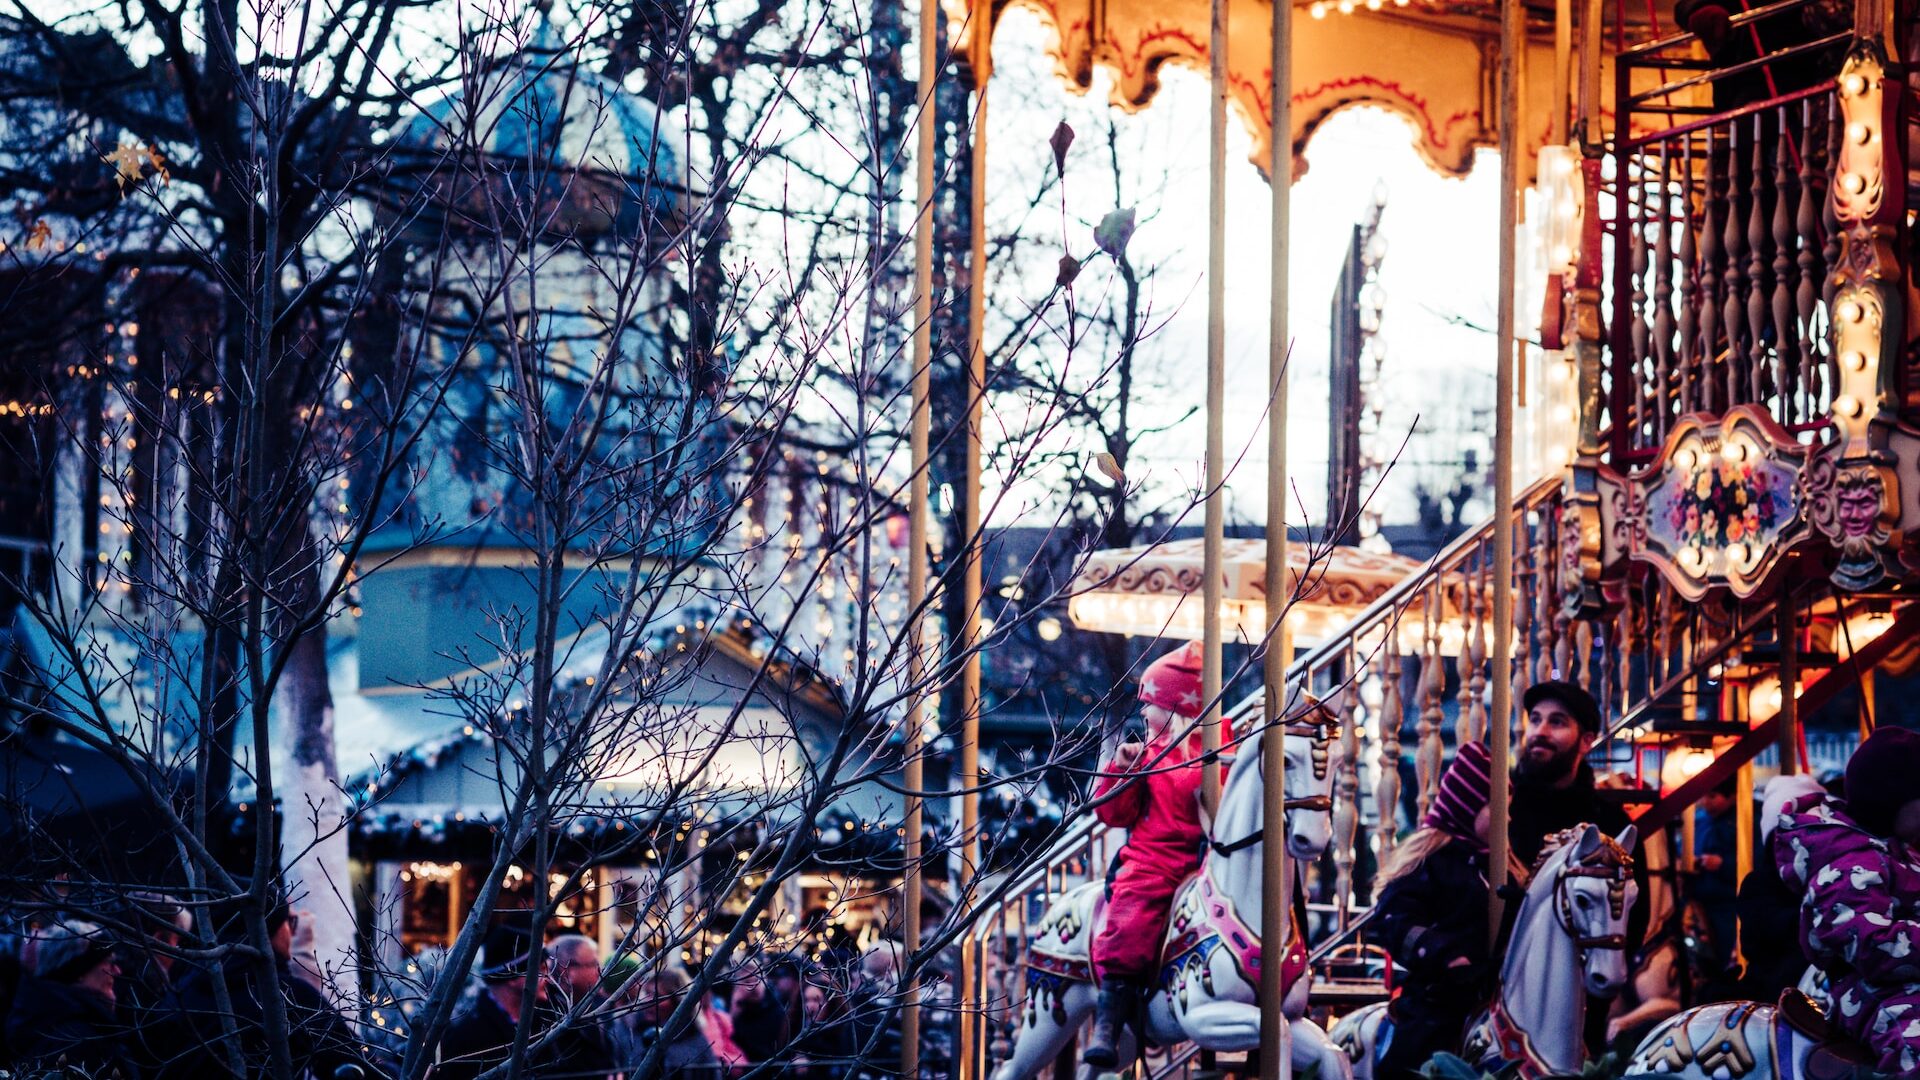 Tivoli Gardens is one of the most Instagrammable spots in Denmark.